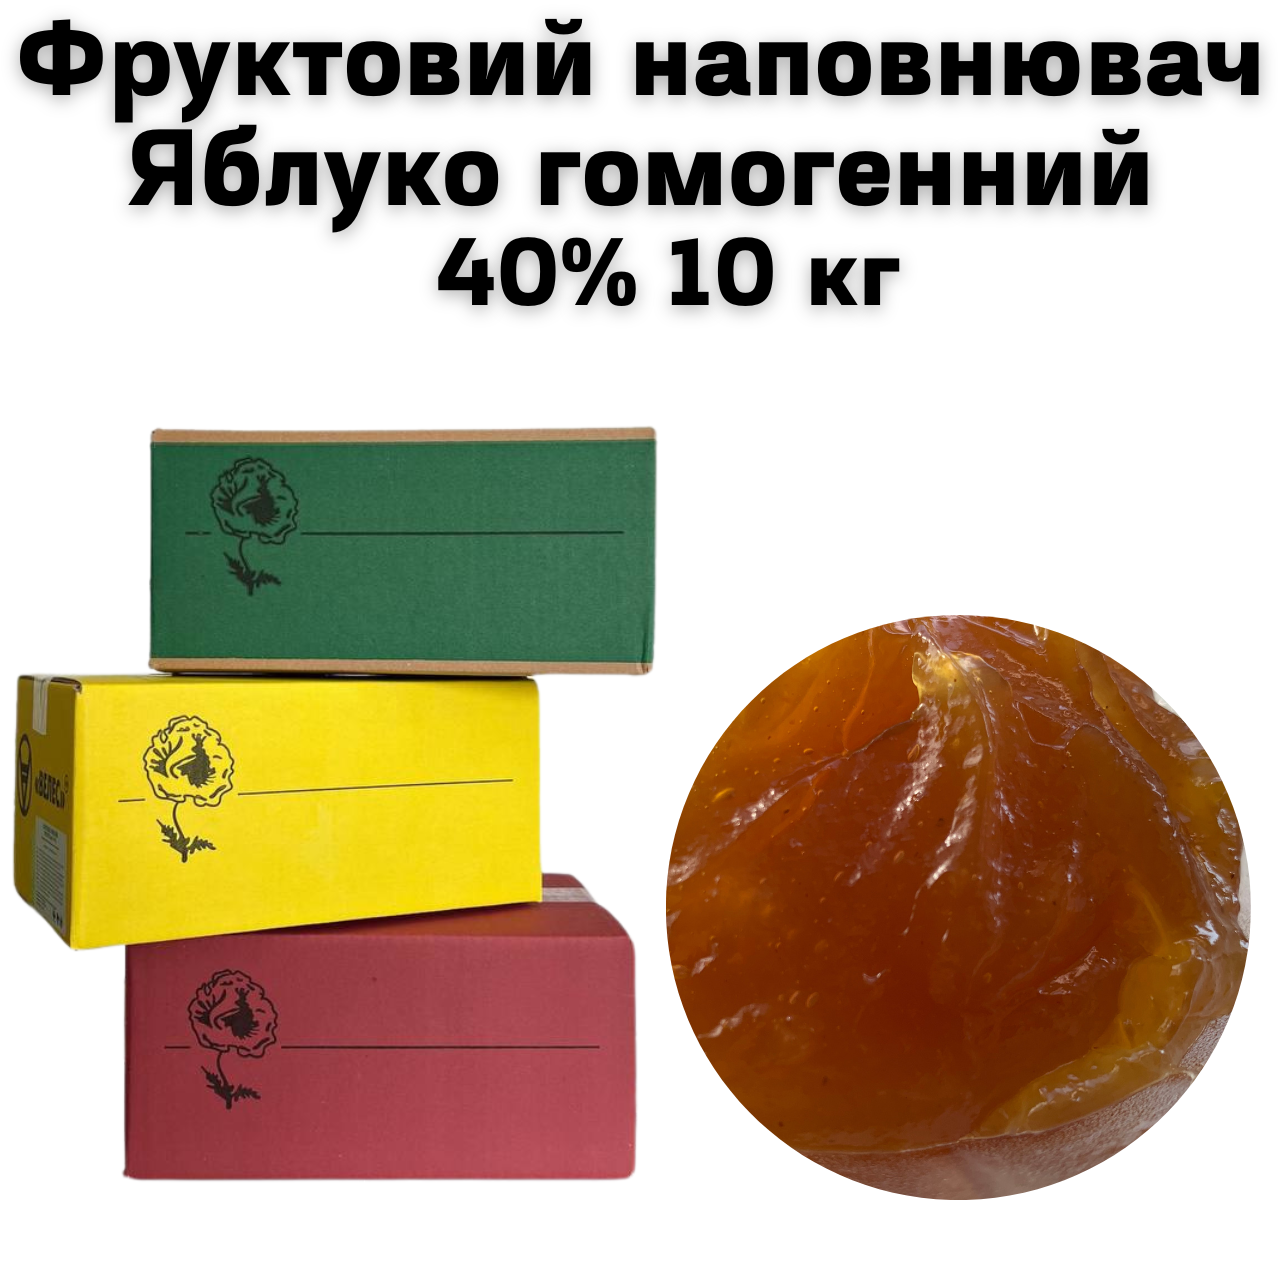 Фруктовий наповнювач Яблуко гомогенний 40%  10 кг